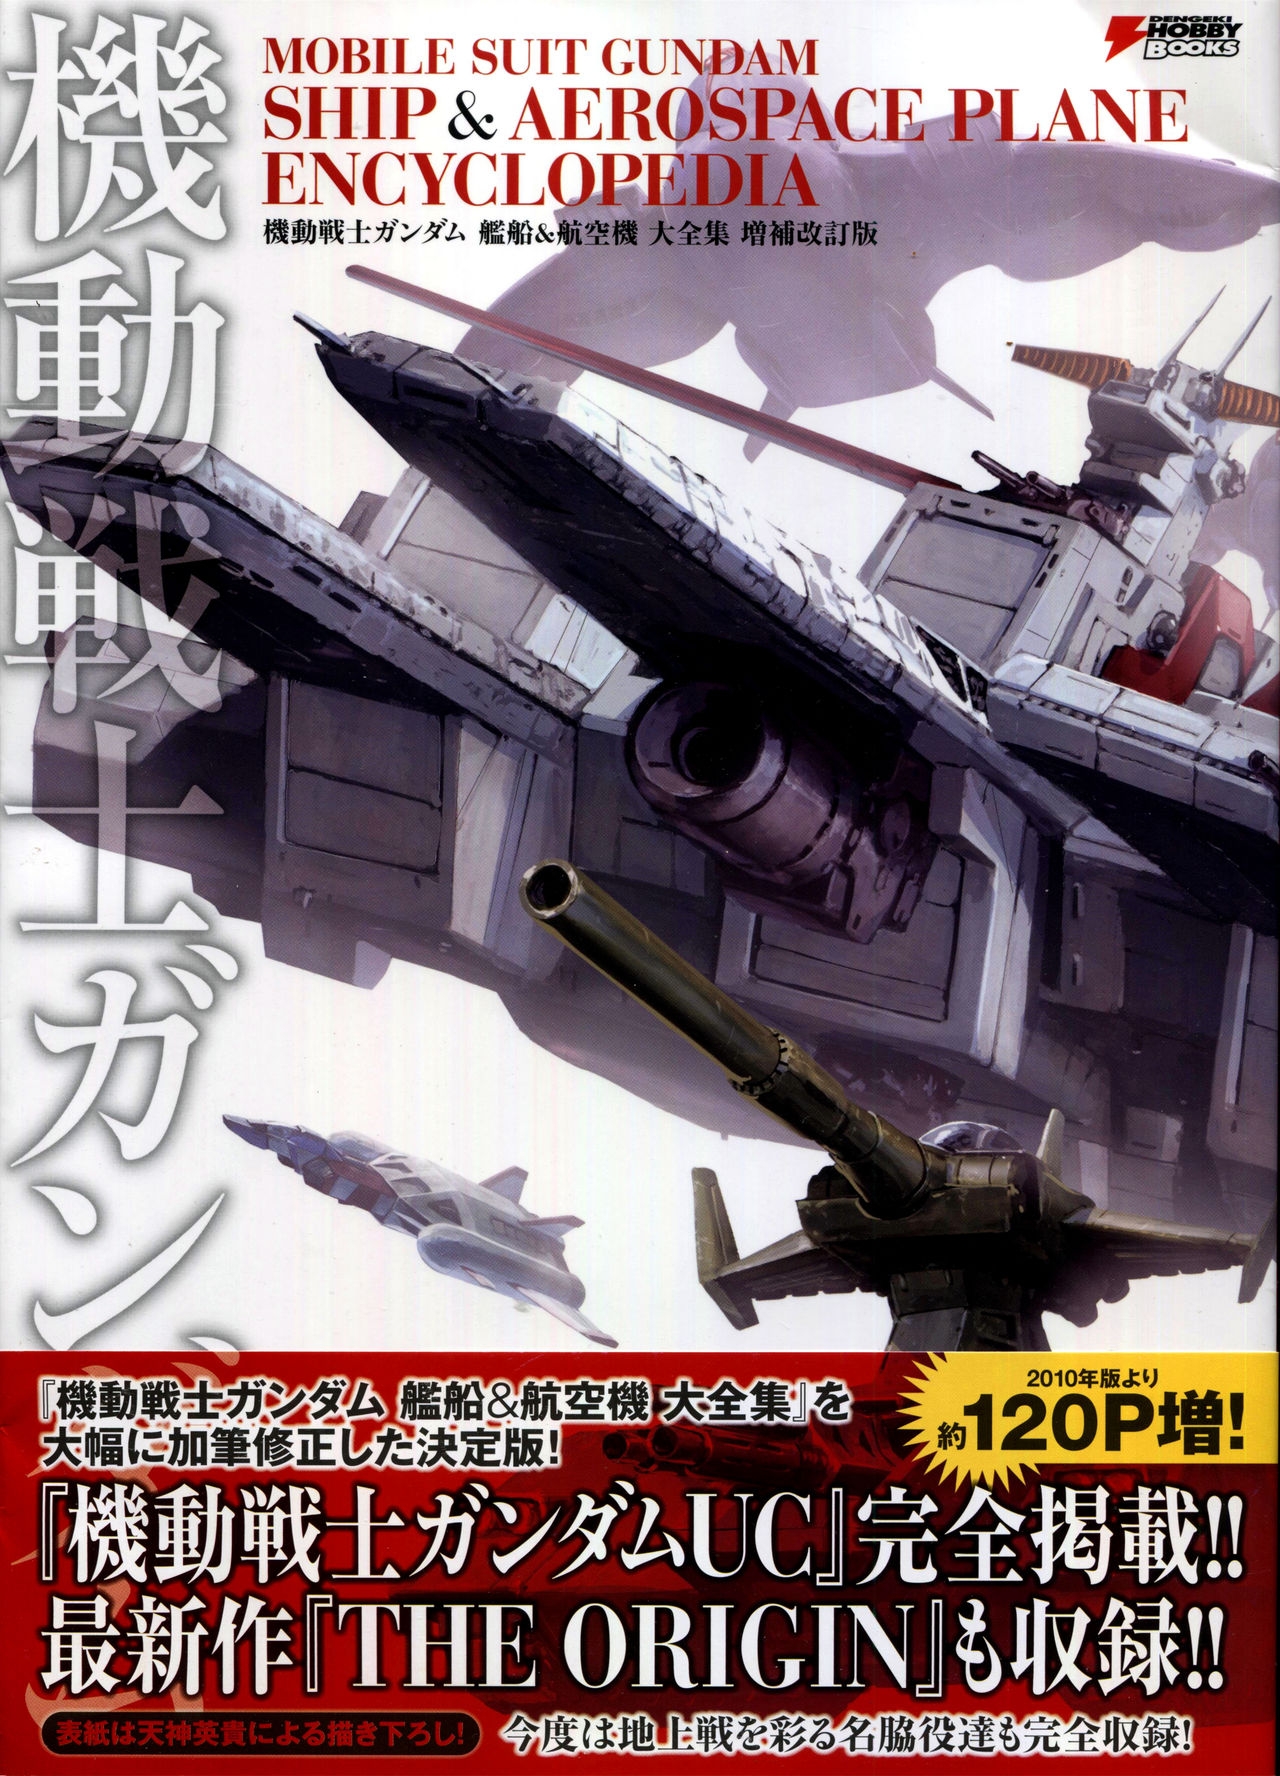 Mobile Suit Gundam - Ship & Aerospace Plane Encyclopedia - Revised Edition 2